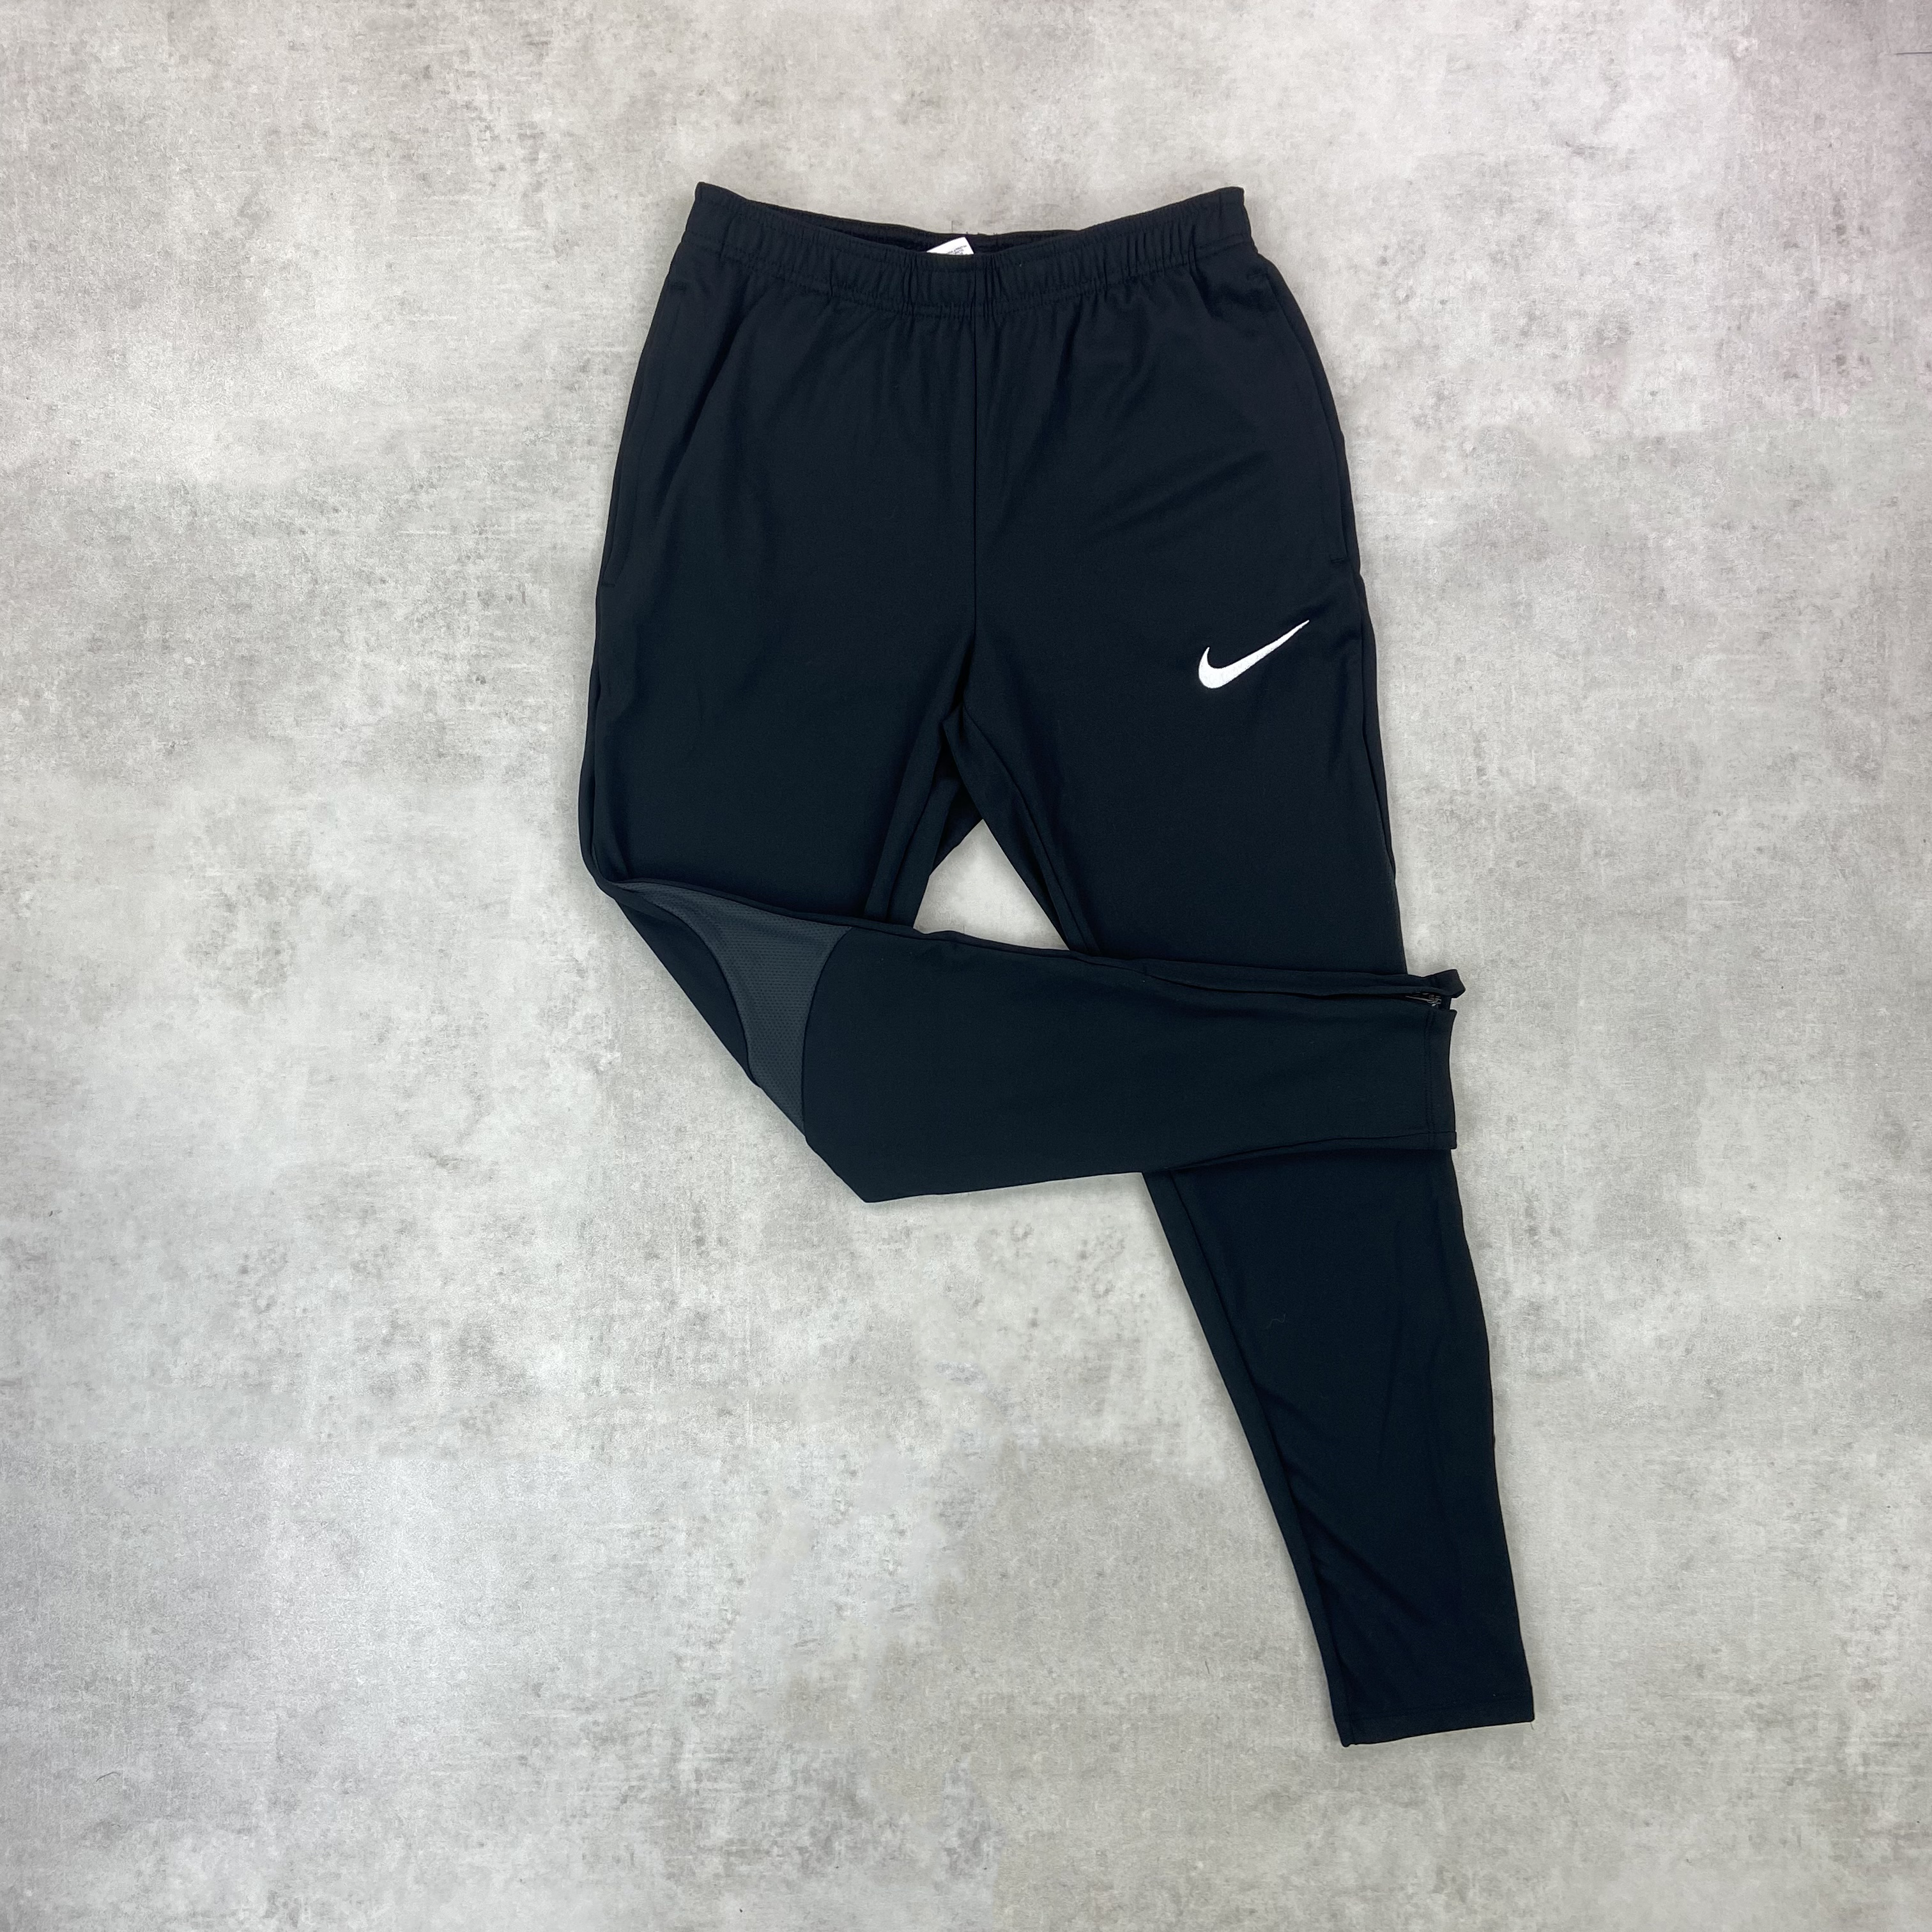 Nike Academy Pro Pants Black/ Anthracite